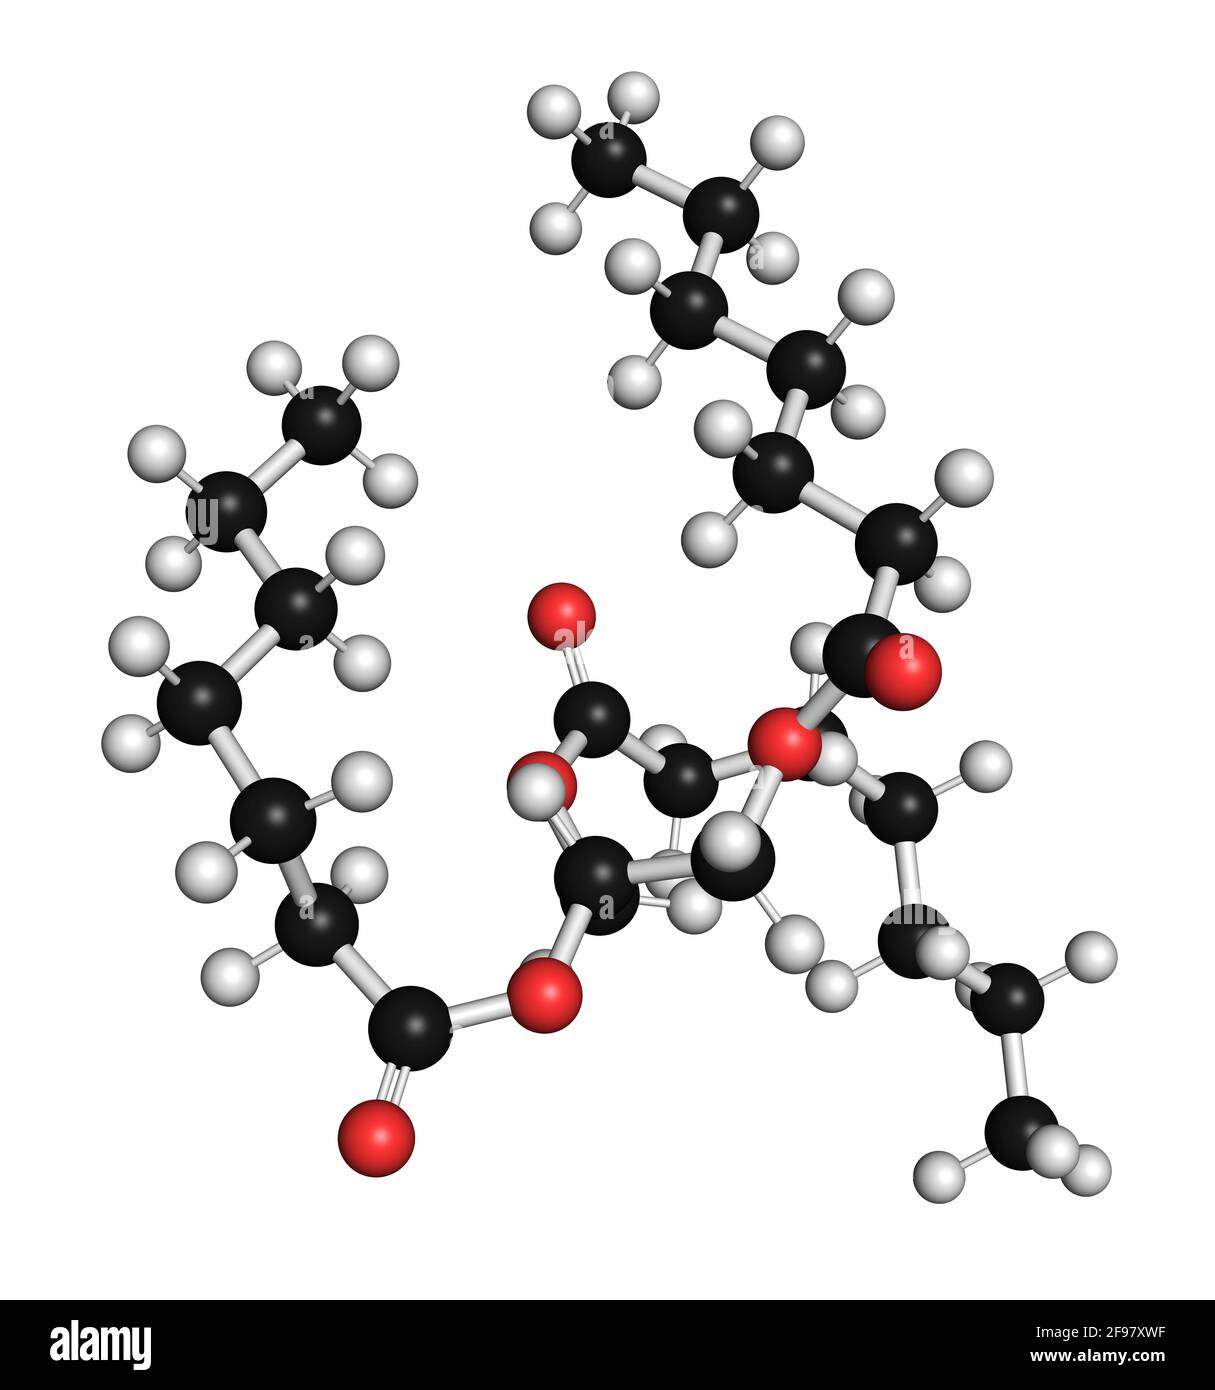 Triheptanoin drug molecule, illustration Stock Photo